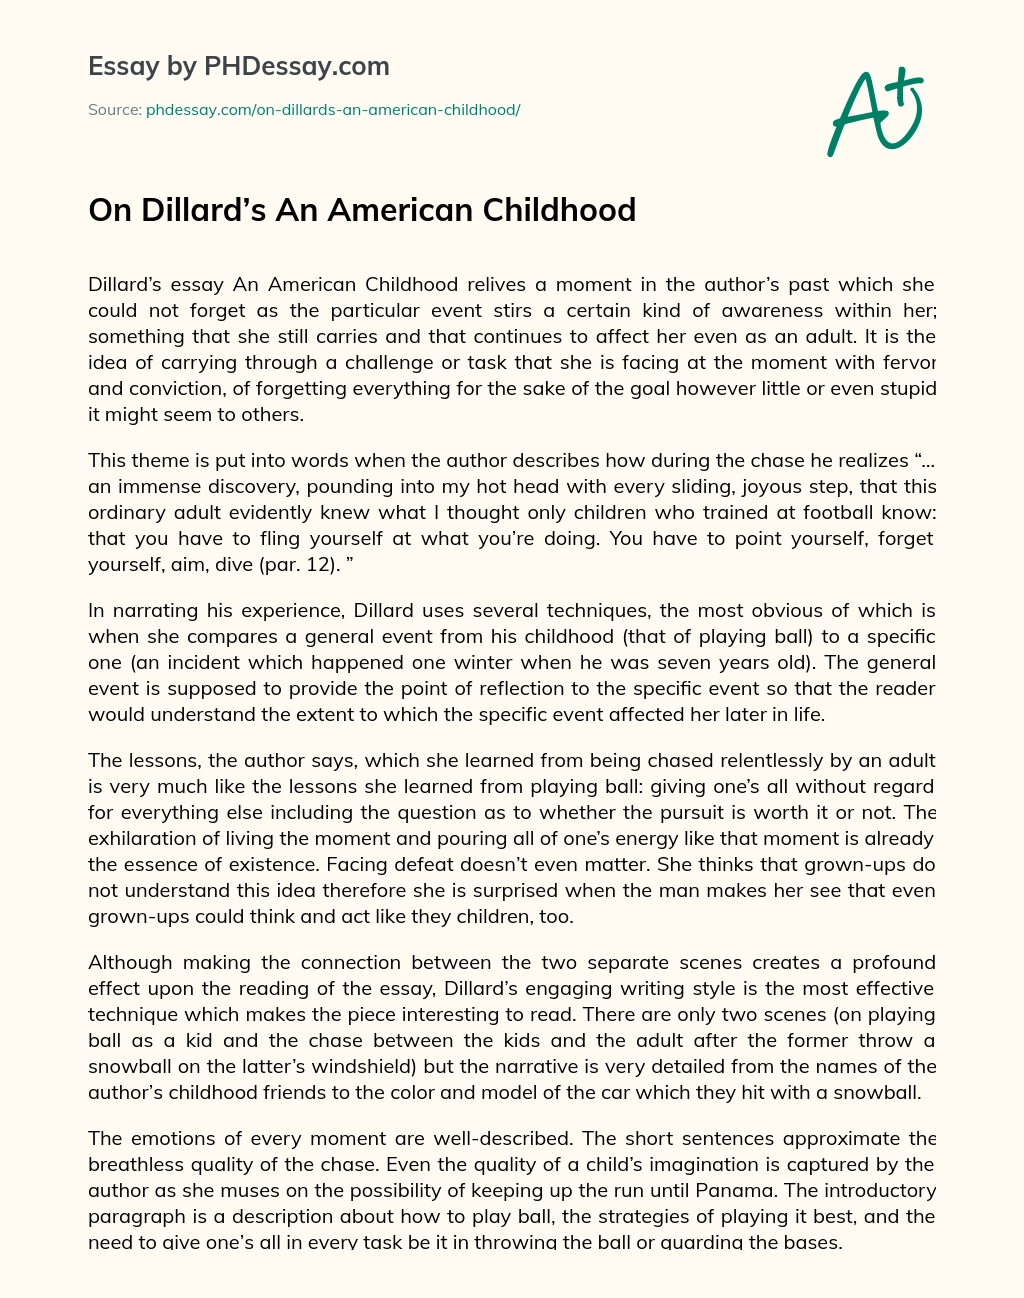 Реферат: Benevolent Neglect In An American Childhood Essay